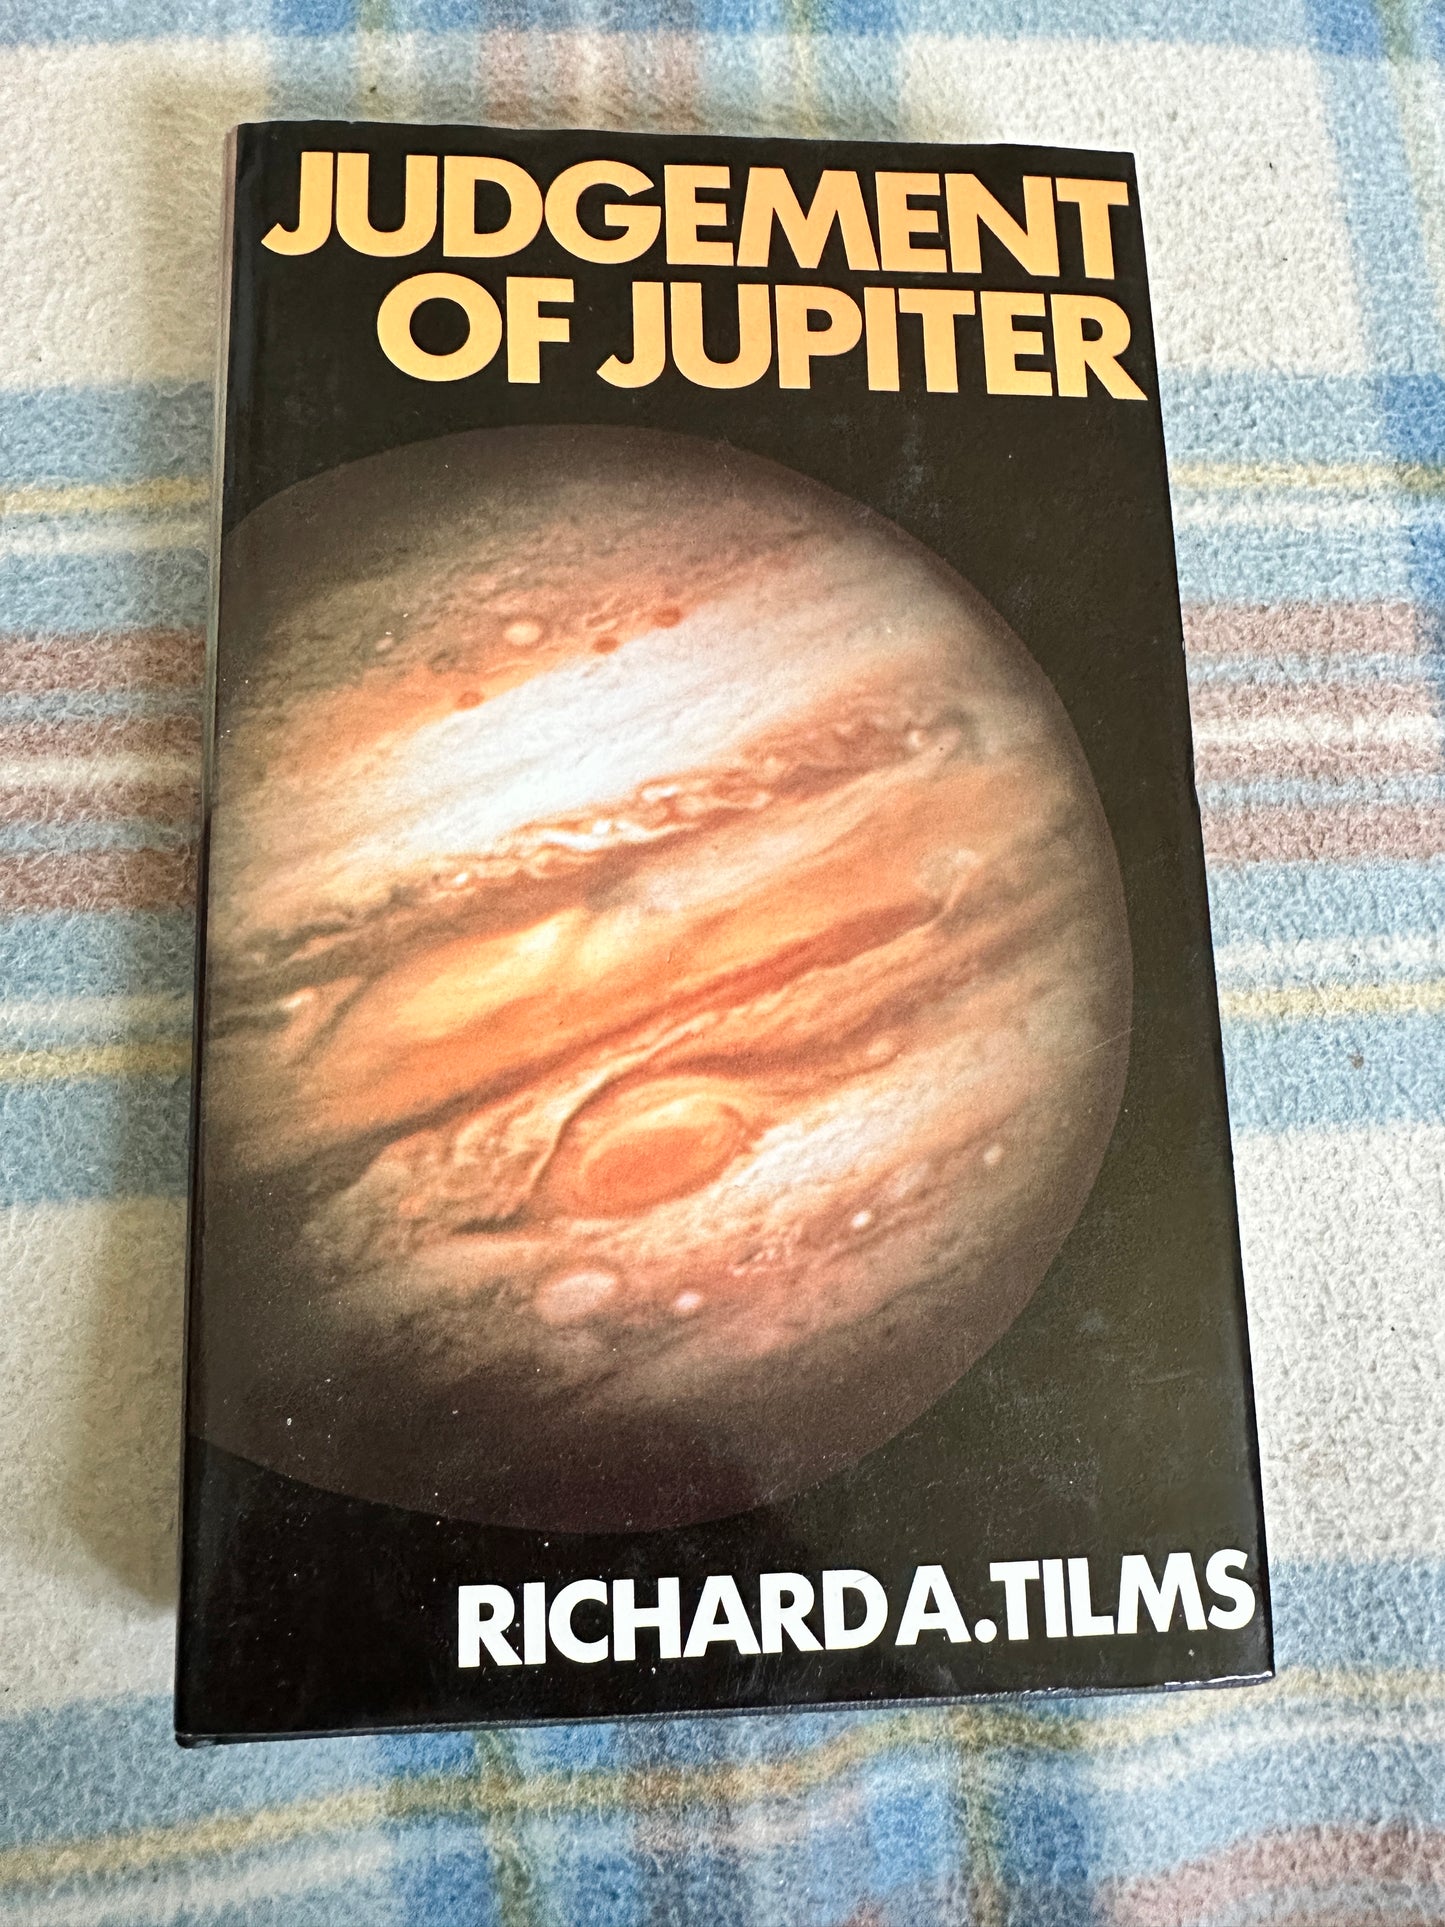 1980*1st* Judgement Of Jupiter - Richard A. Tilms(Book Club)